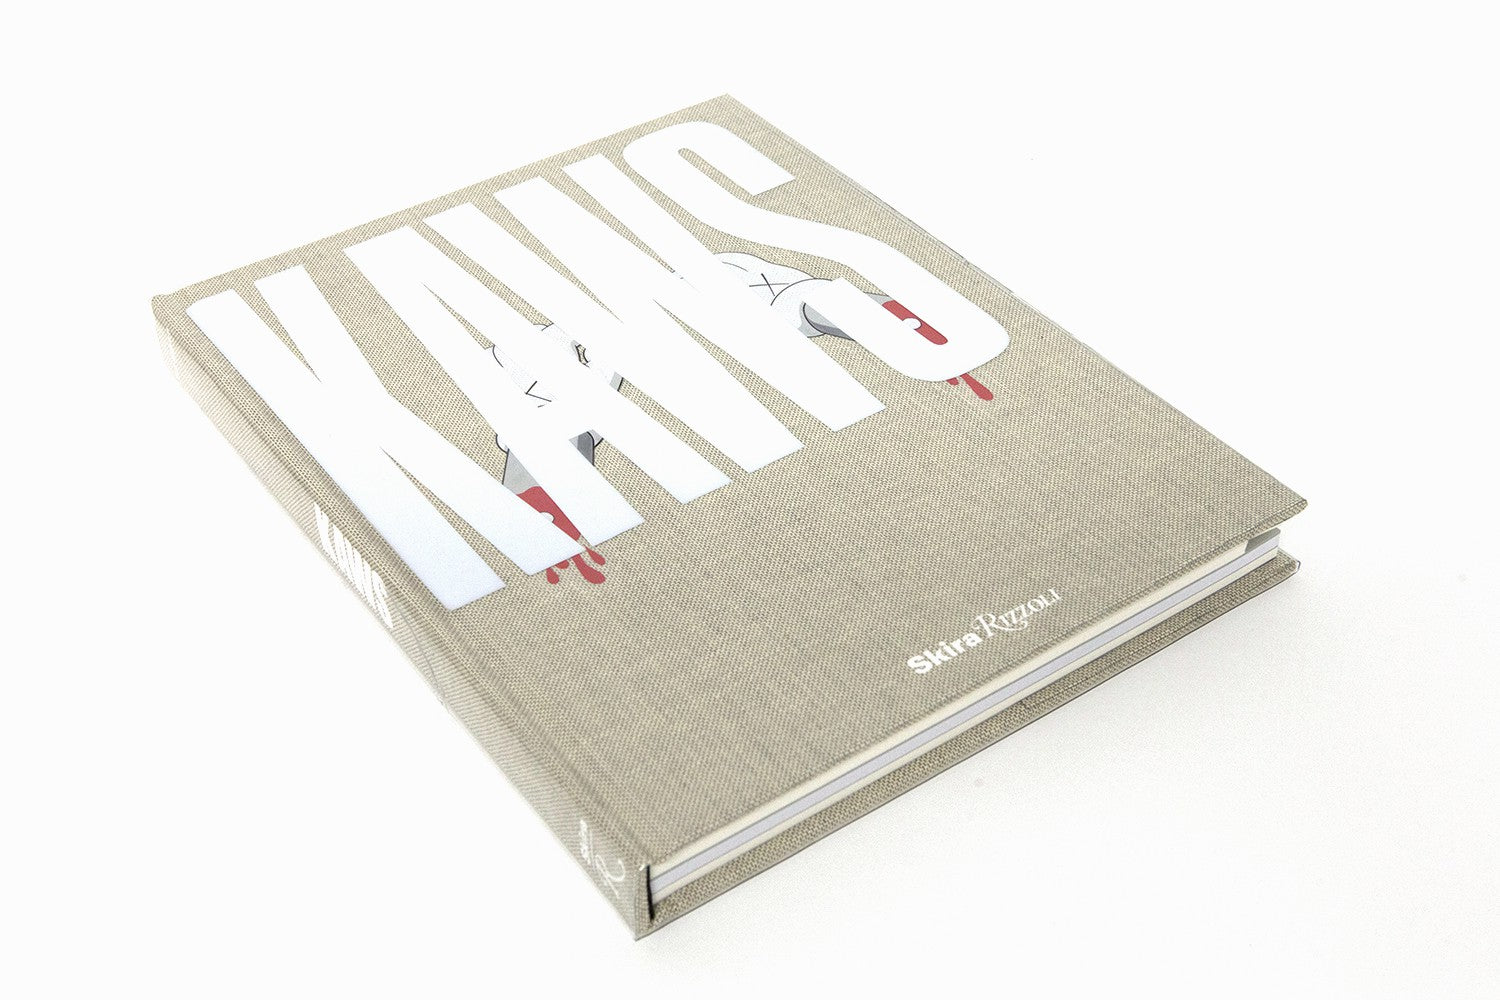 KAWS - Rizzoli monographie